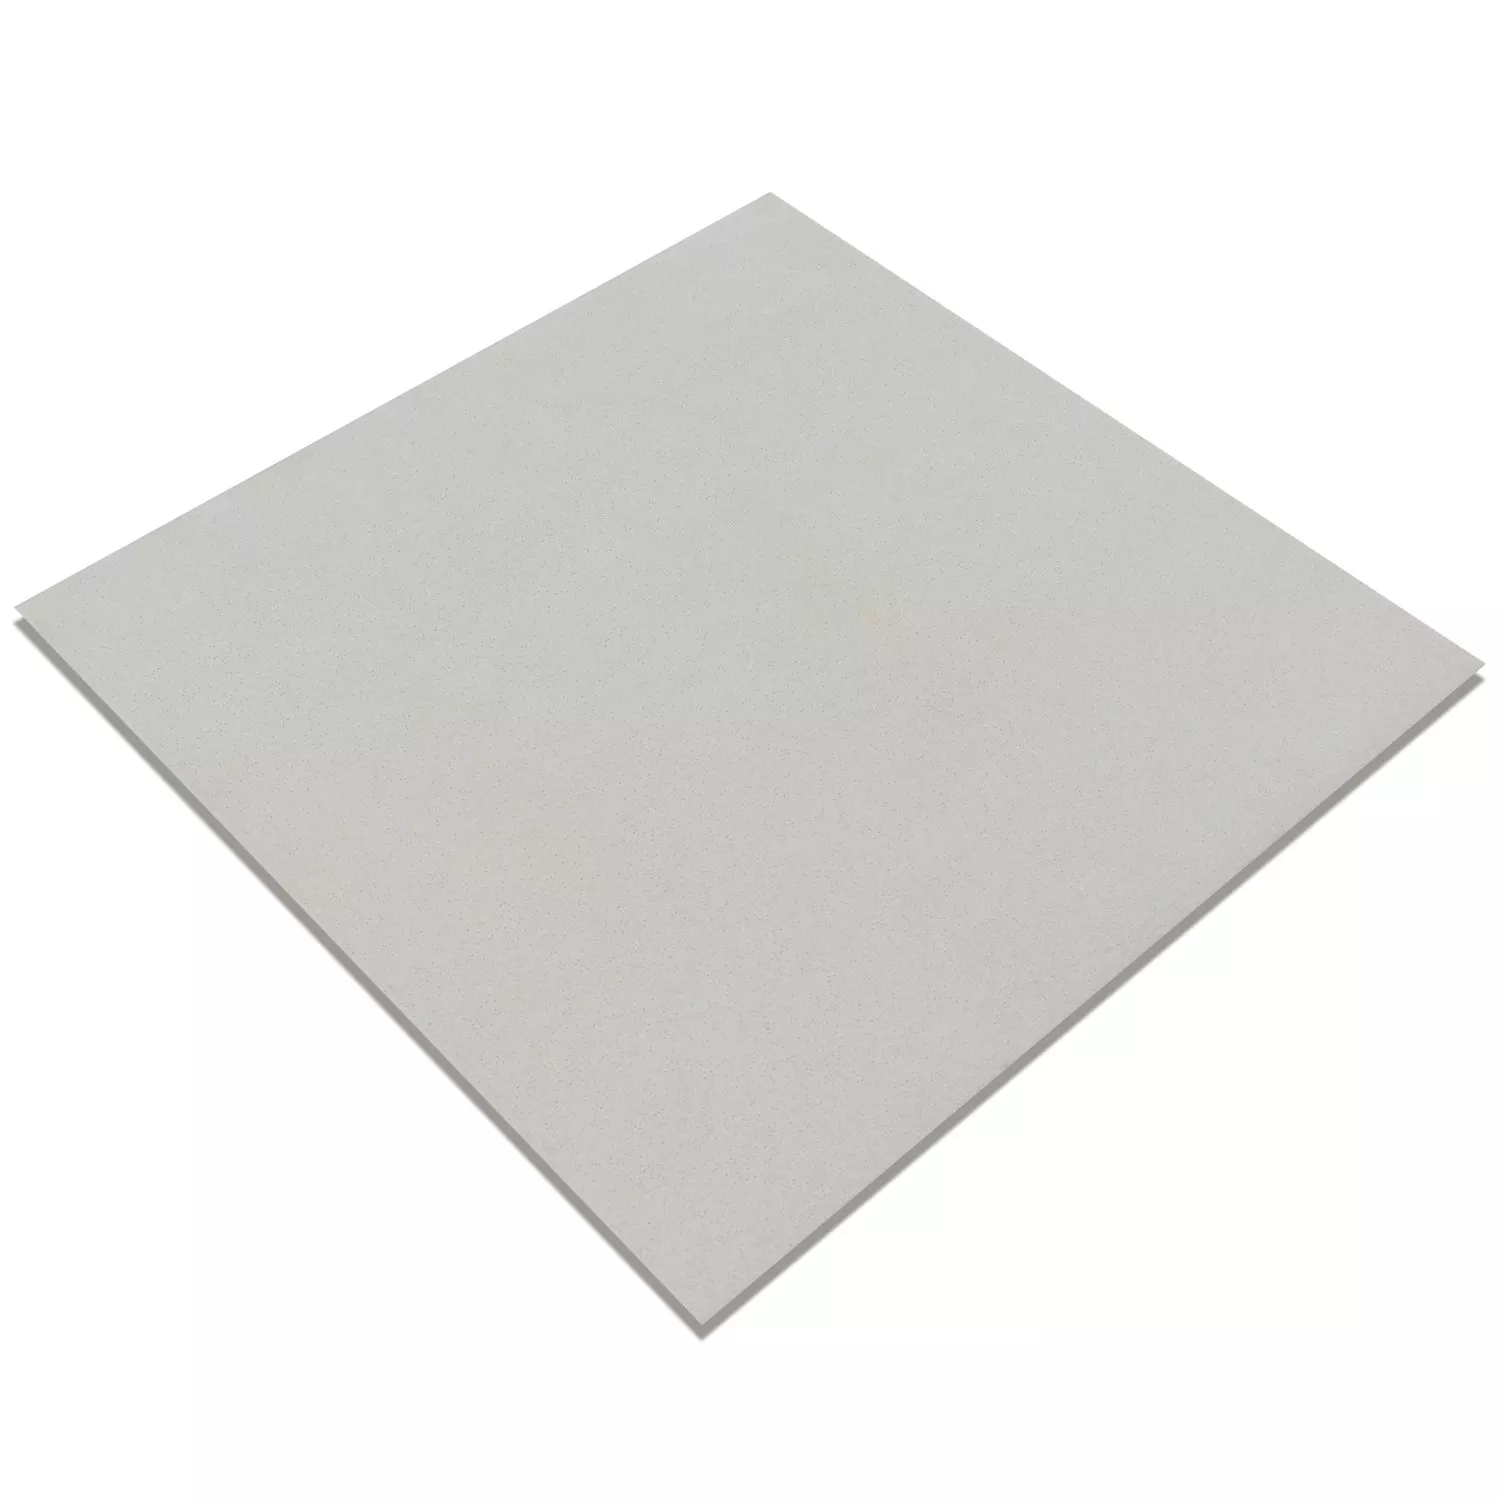 Vzorek Vzhled Cementové Dlaždice Gotik Základní Bílá 22,3x22,3cm